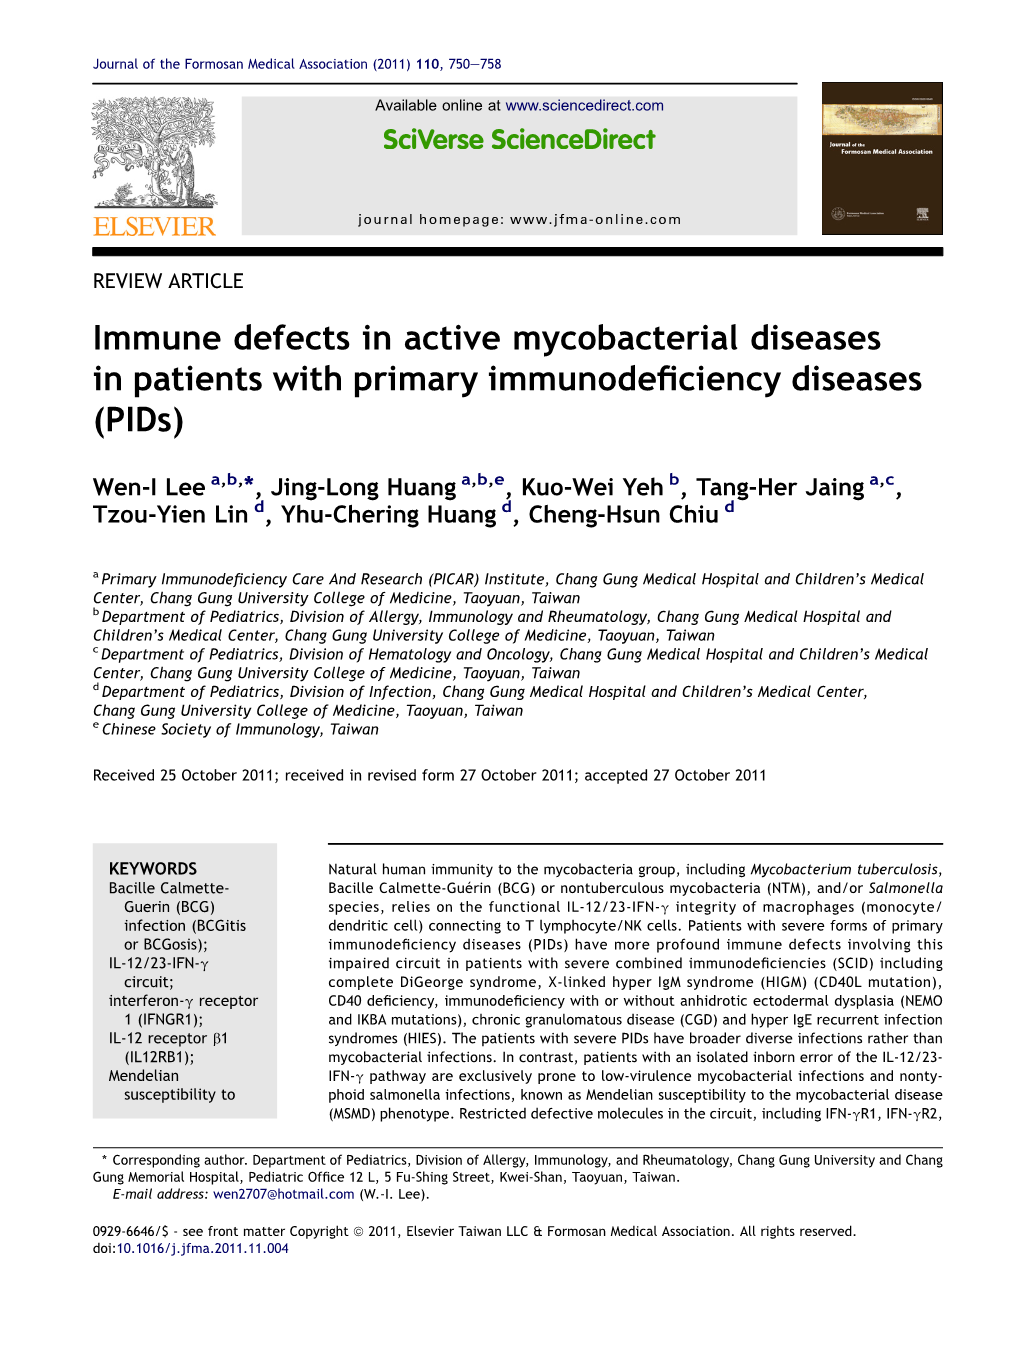 Immune Defects in Active Mycobacterial Diseases in Patients with Primary Immunodeﬁciency Diseases (Pids)